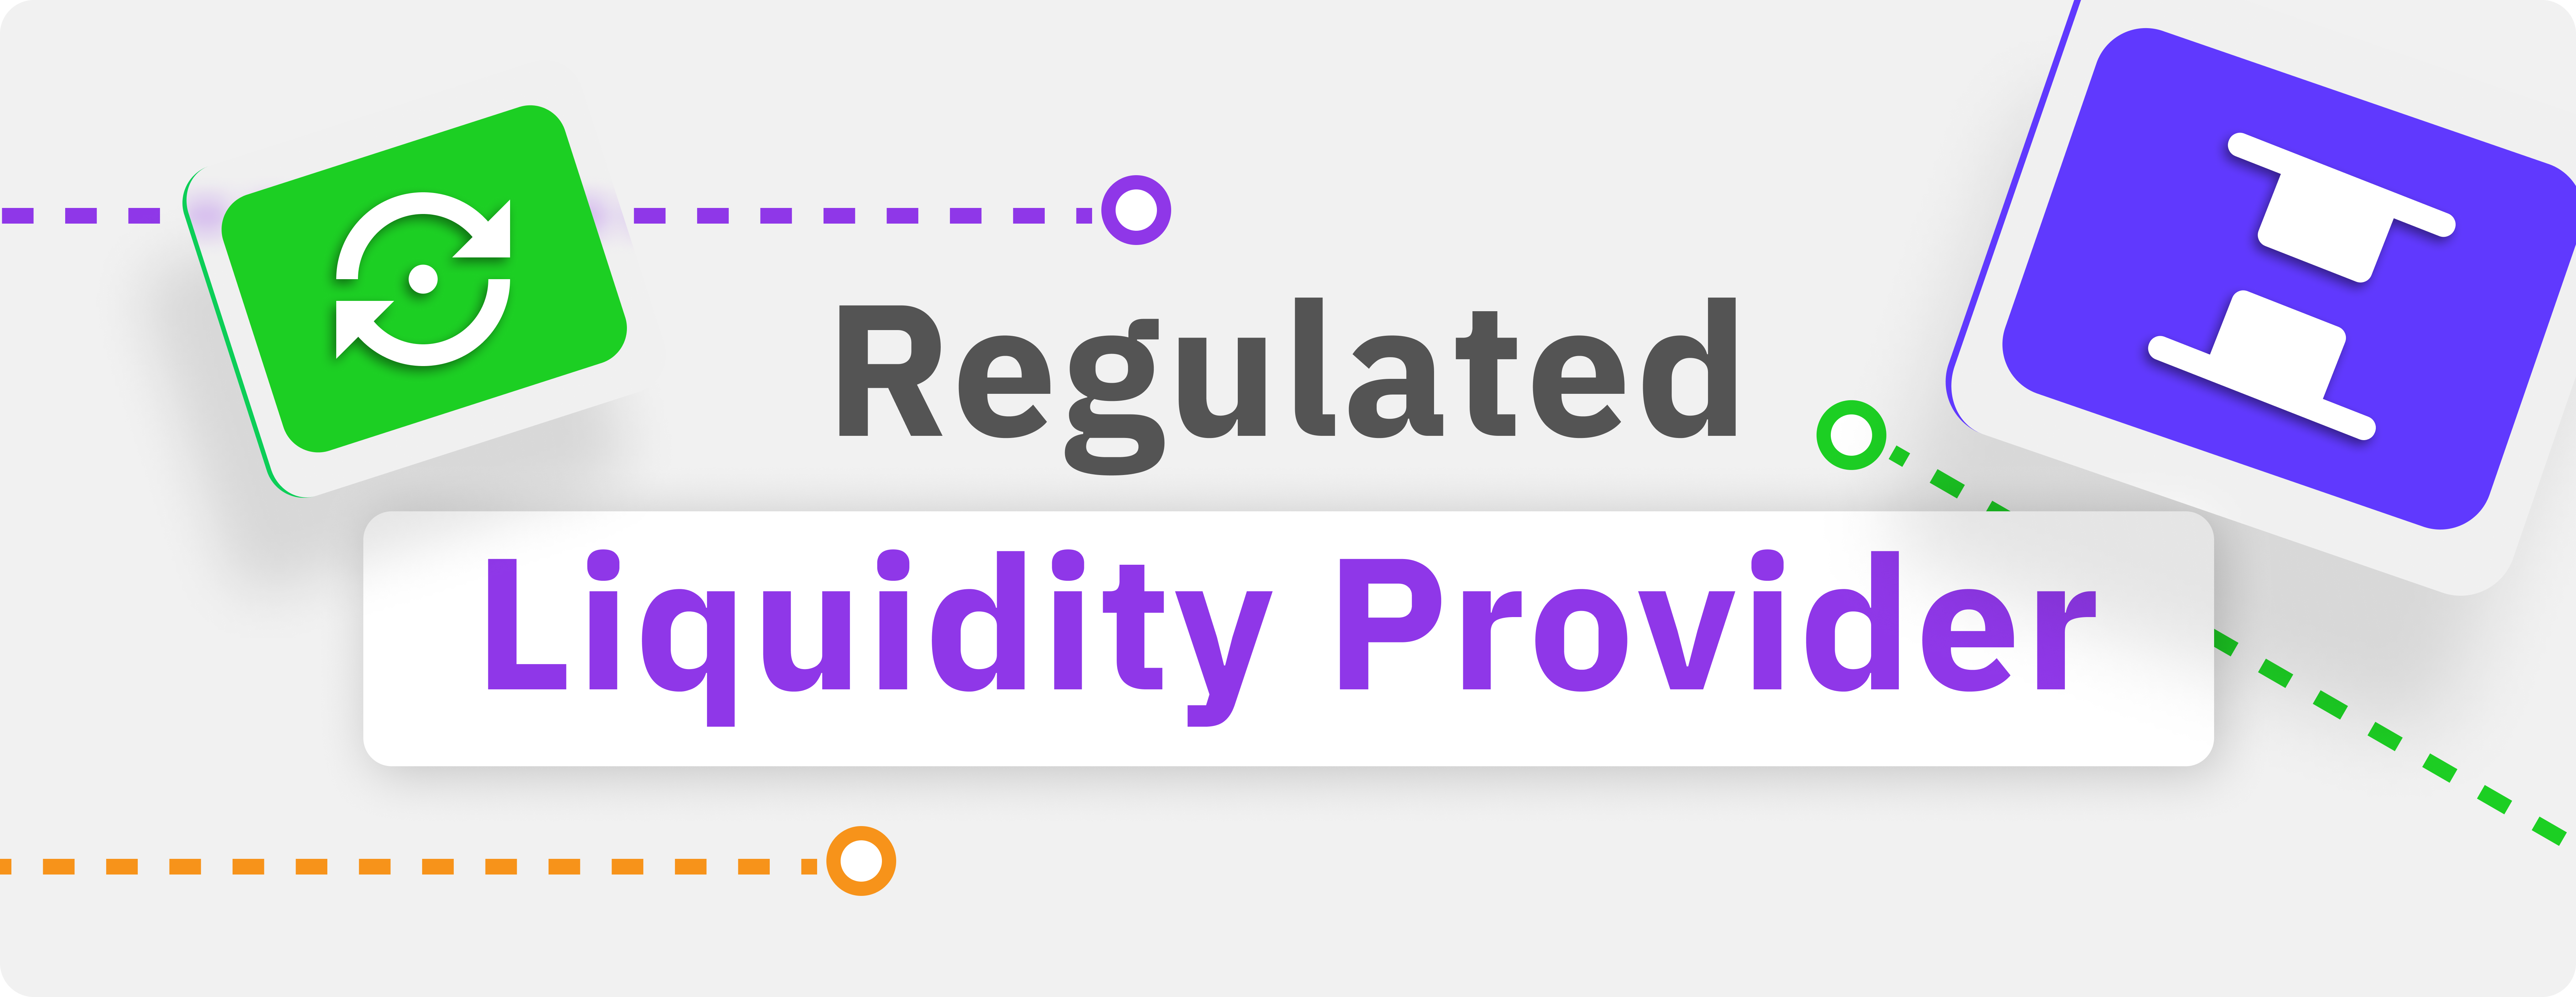 A Regulated Liquidity Provider